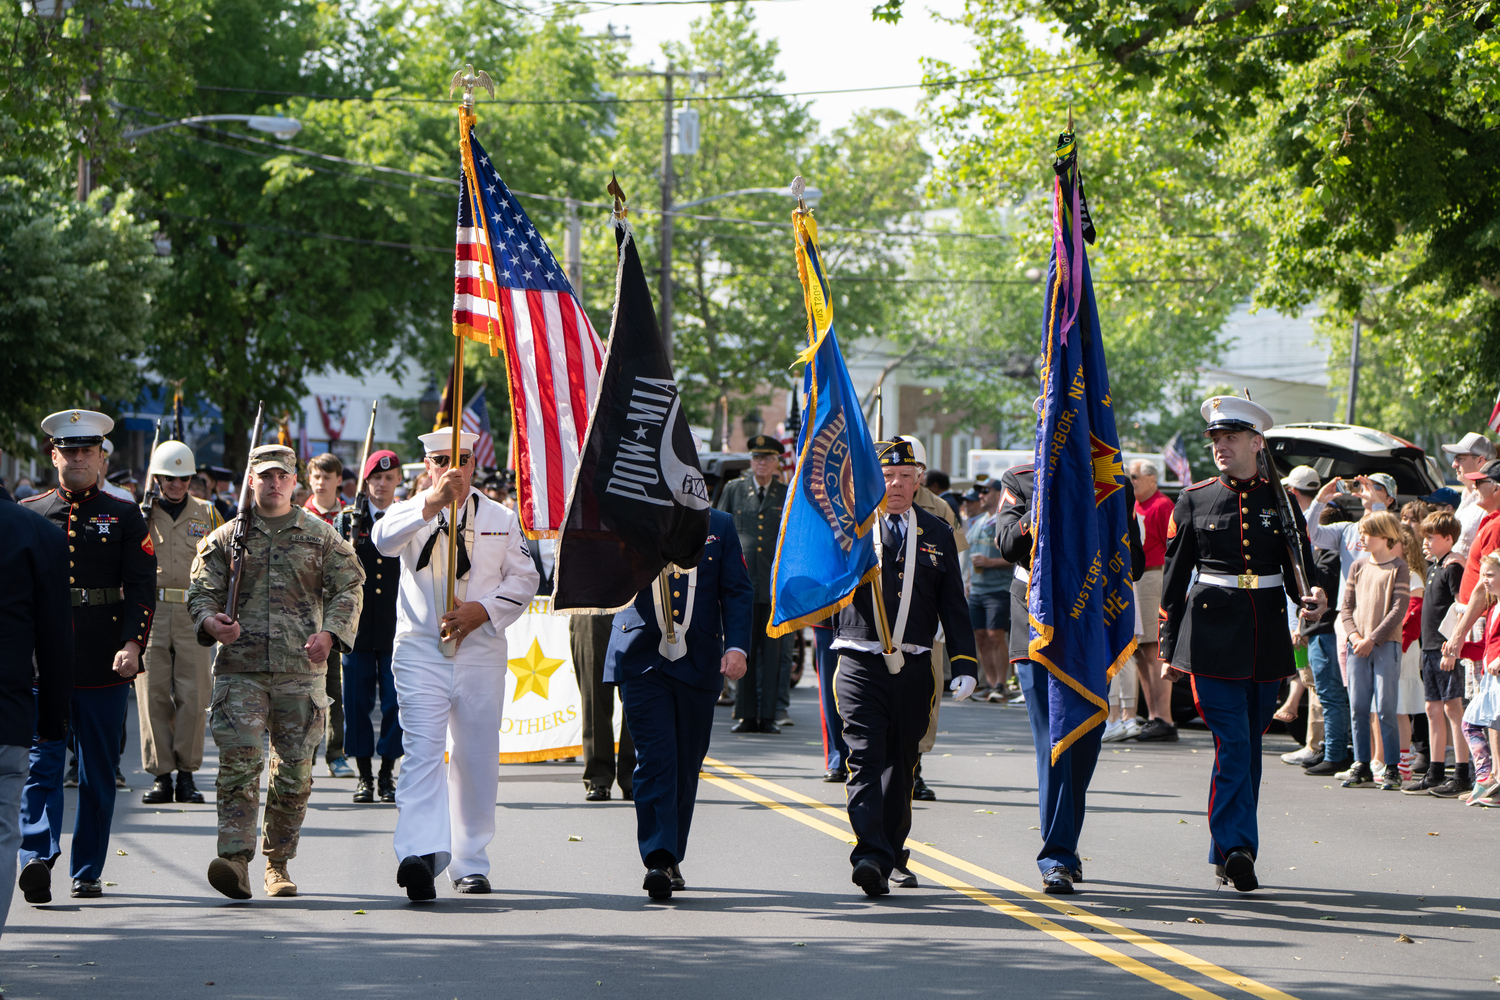 A military color guard makes it way down Main Street in Sag Harbor's annual Memorial Day parade. LORI HAWKINS